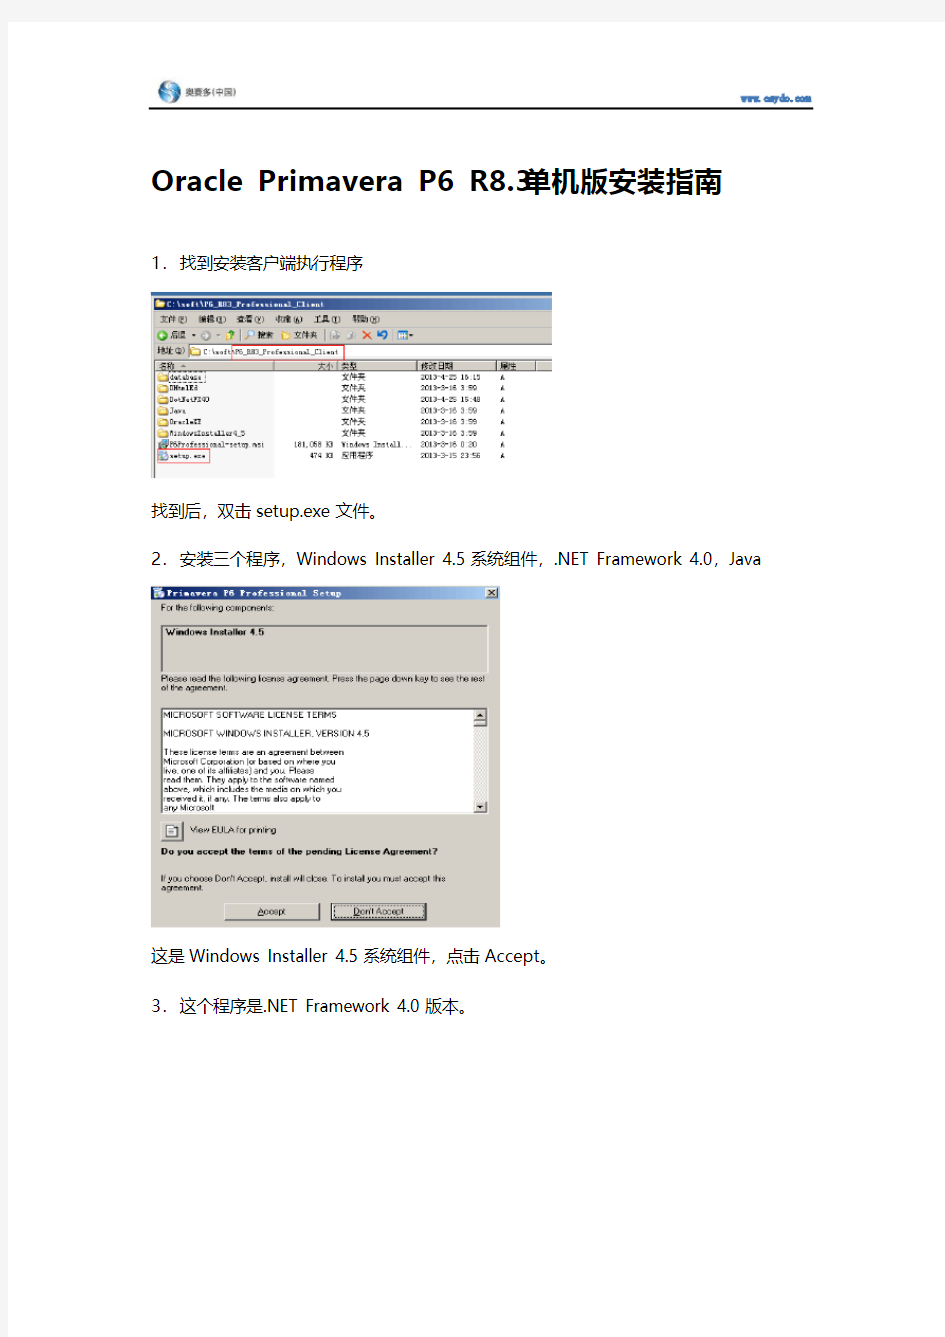 Oracle Primavera P6 R8.3单机版安装指南